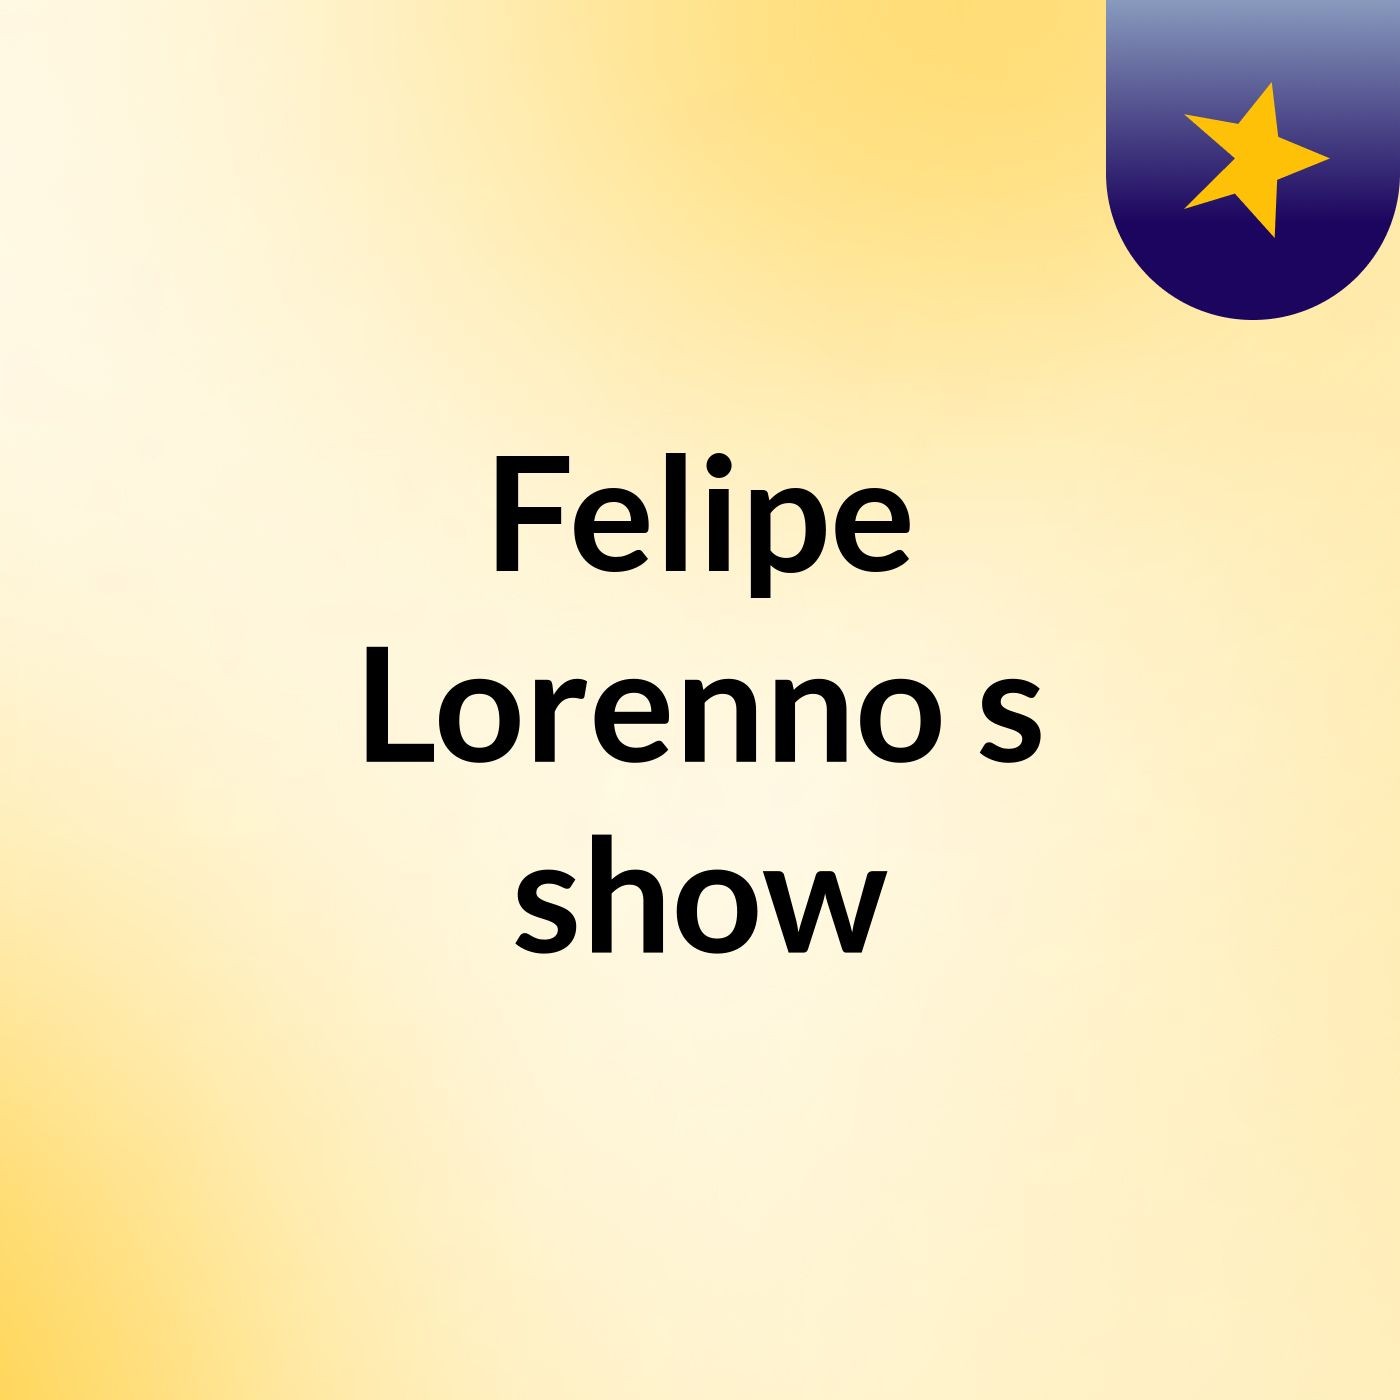 Felipe Lorenno's show